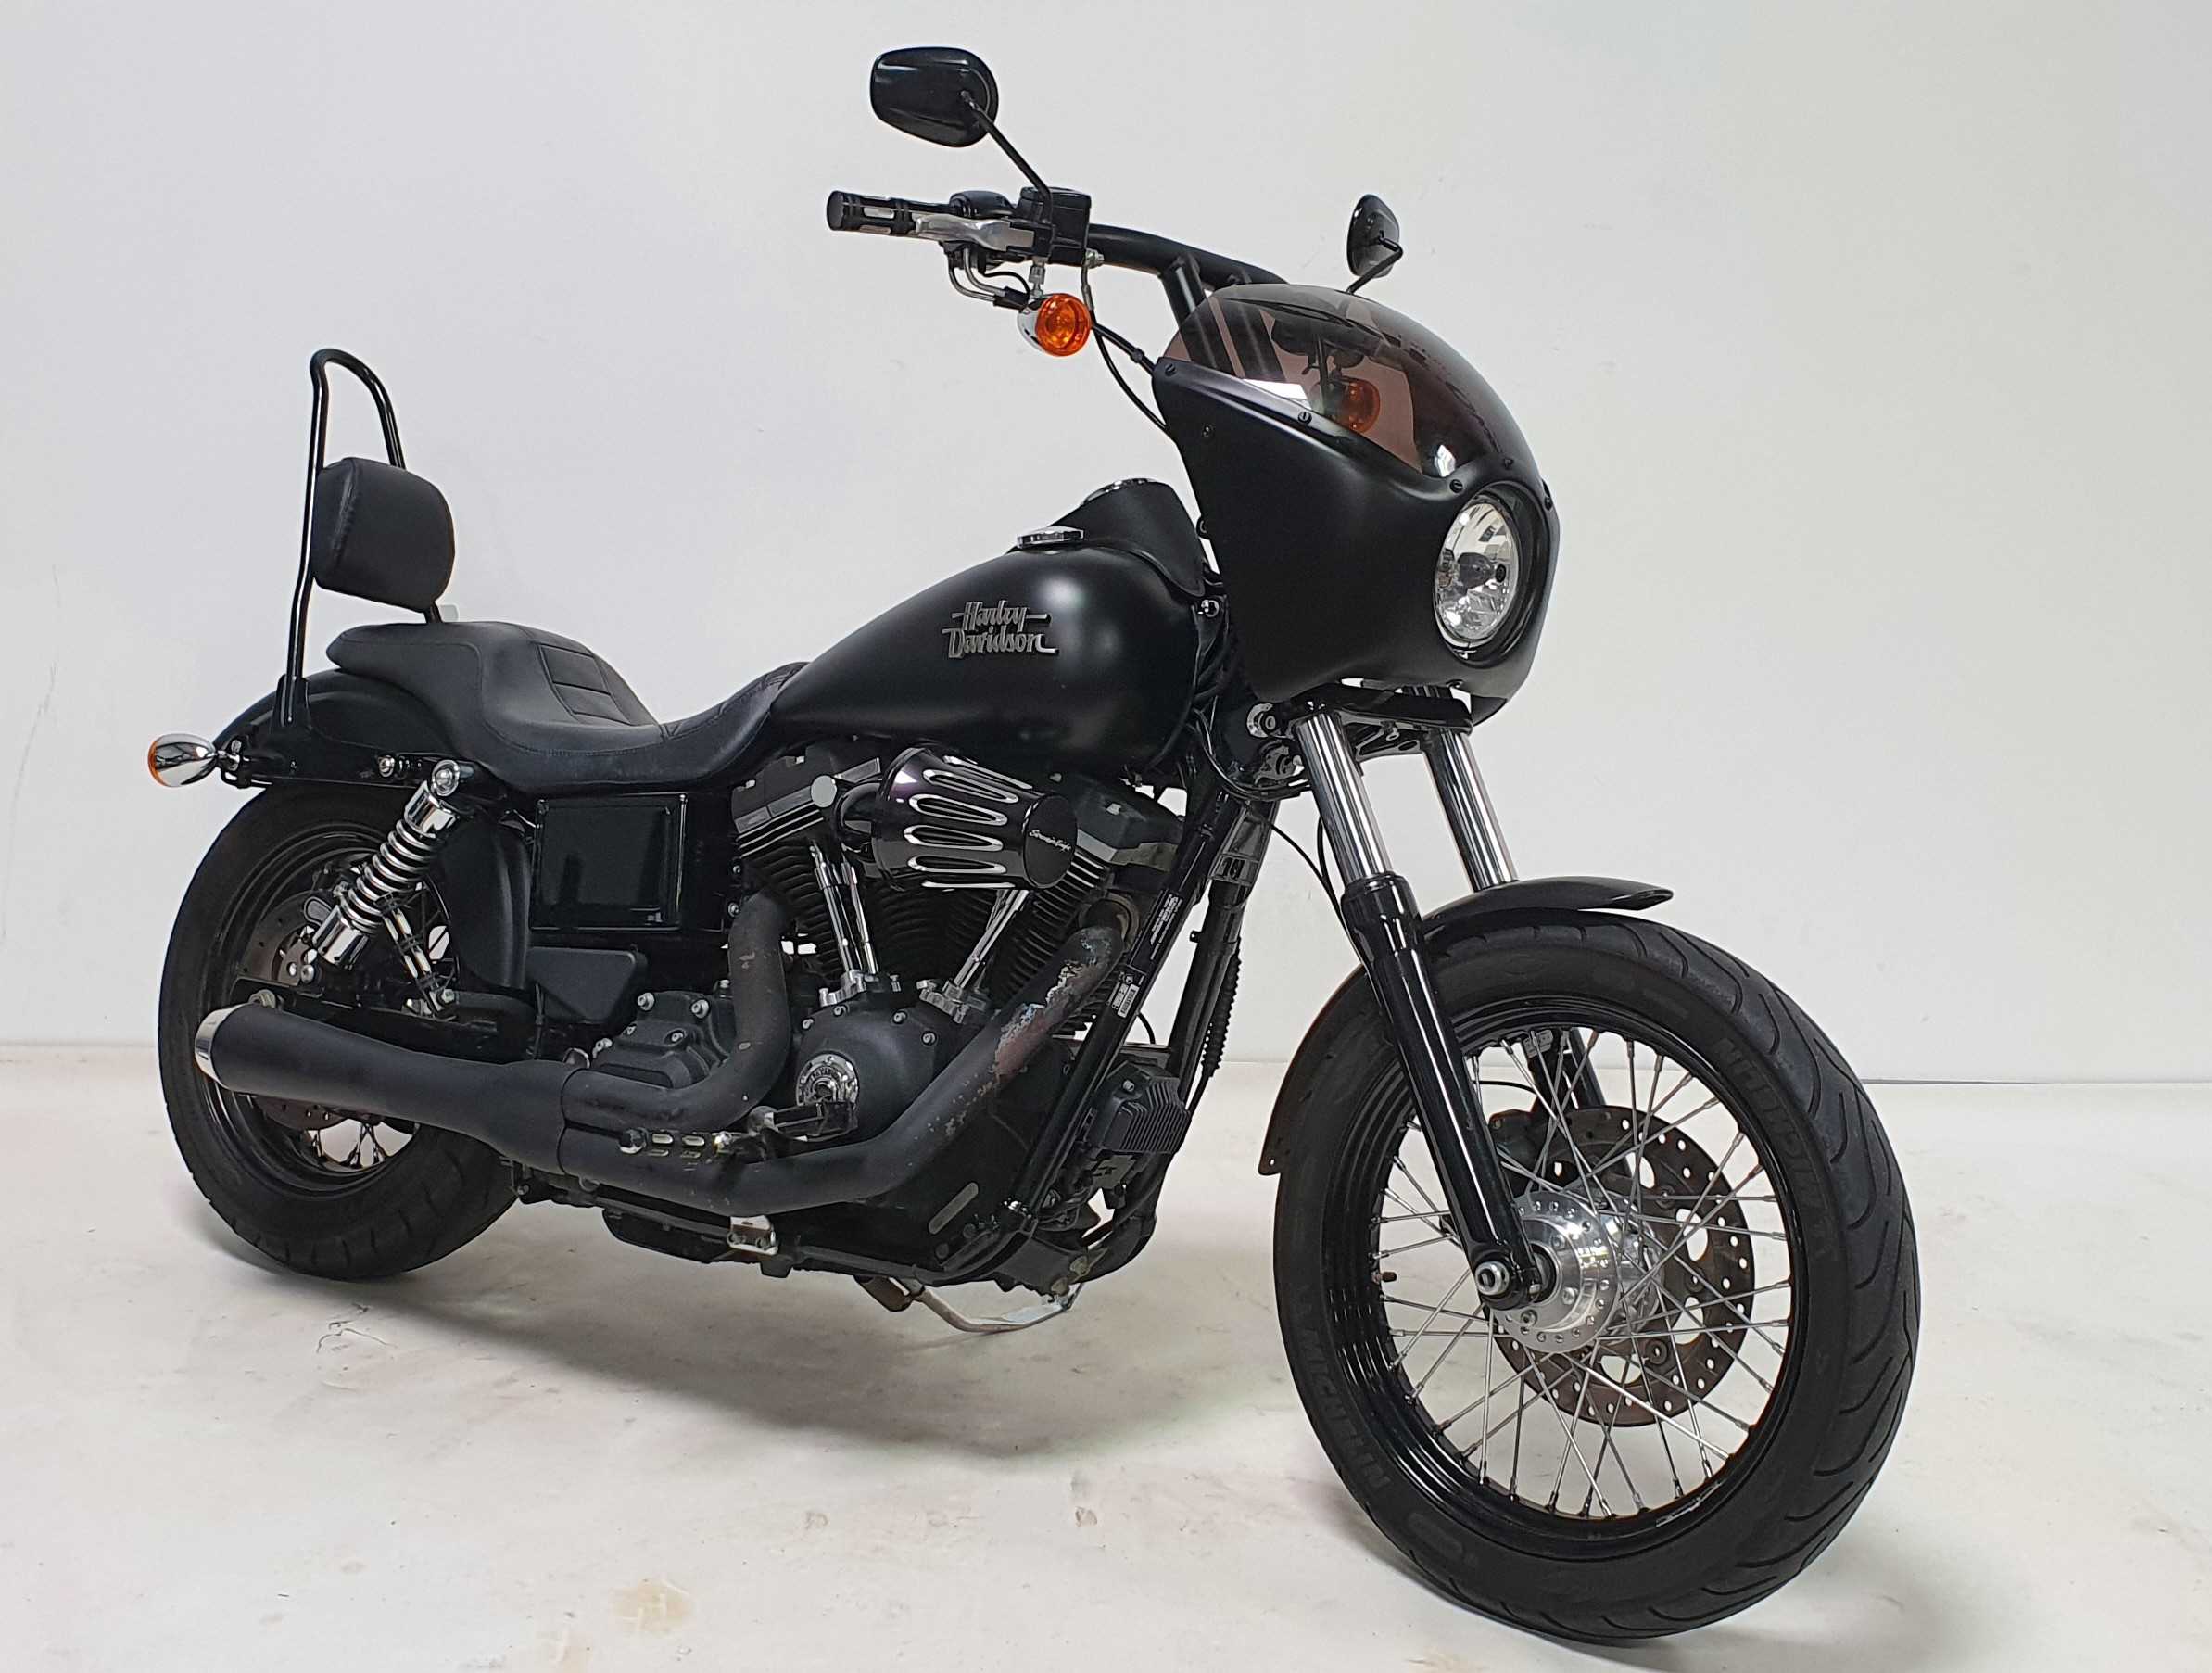 Harley-Davidson 1690 FXD 2014 HD vue 3/4 droite